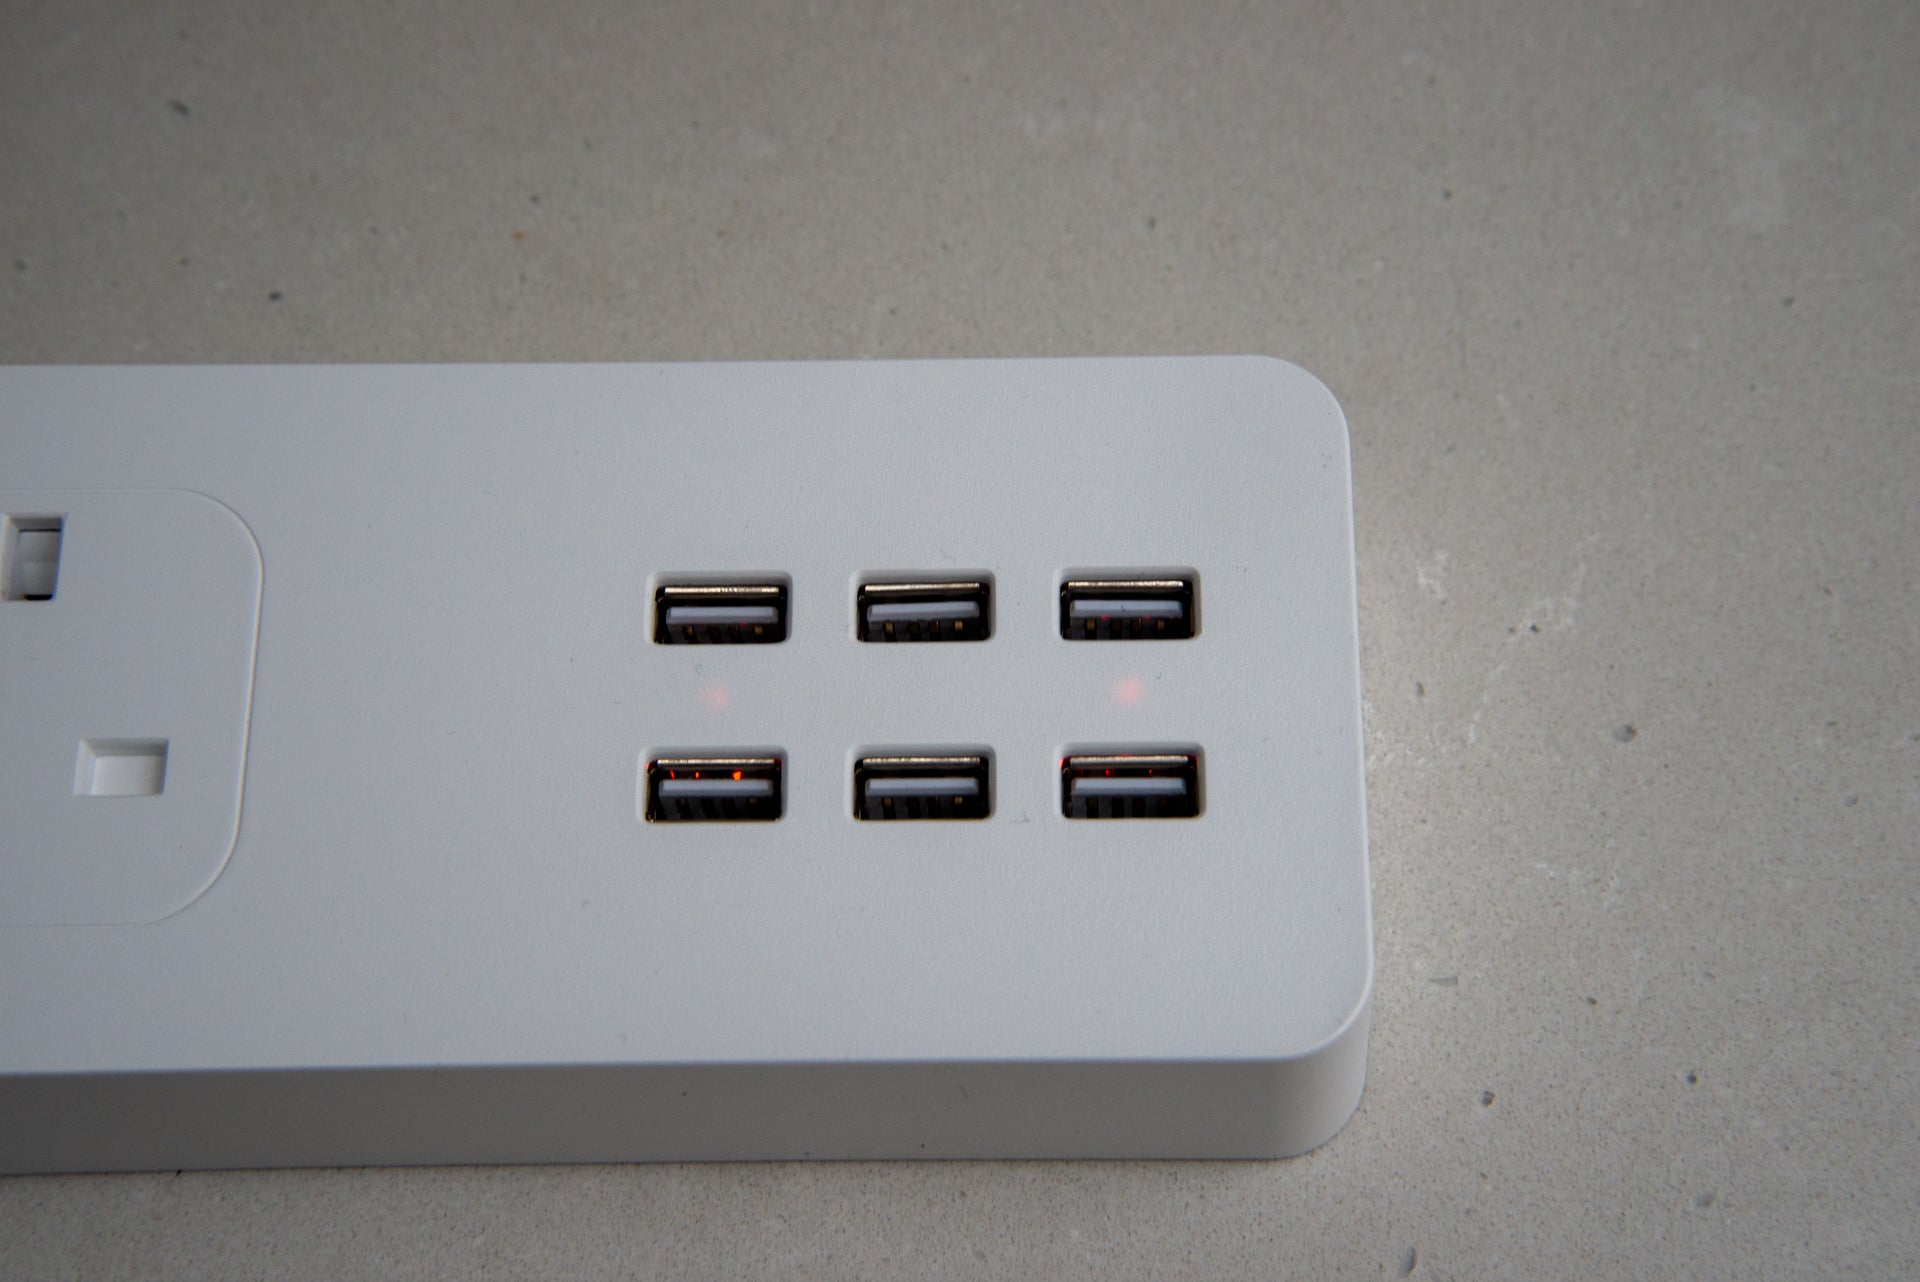 Hey! Smart Power Bar USB ports